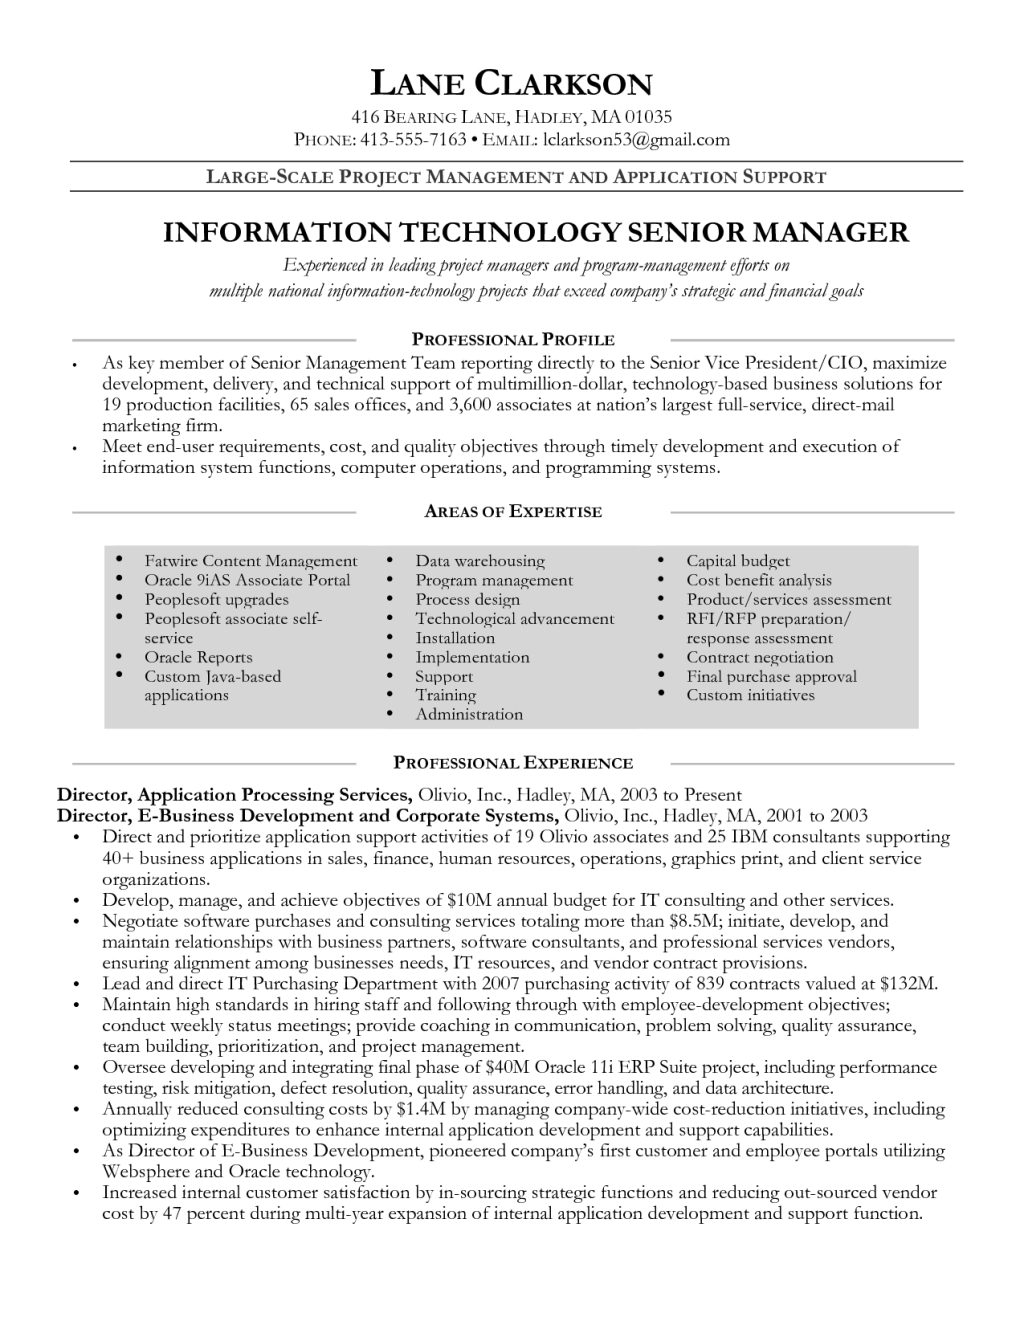 information technology senior project manager resume sample good